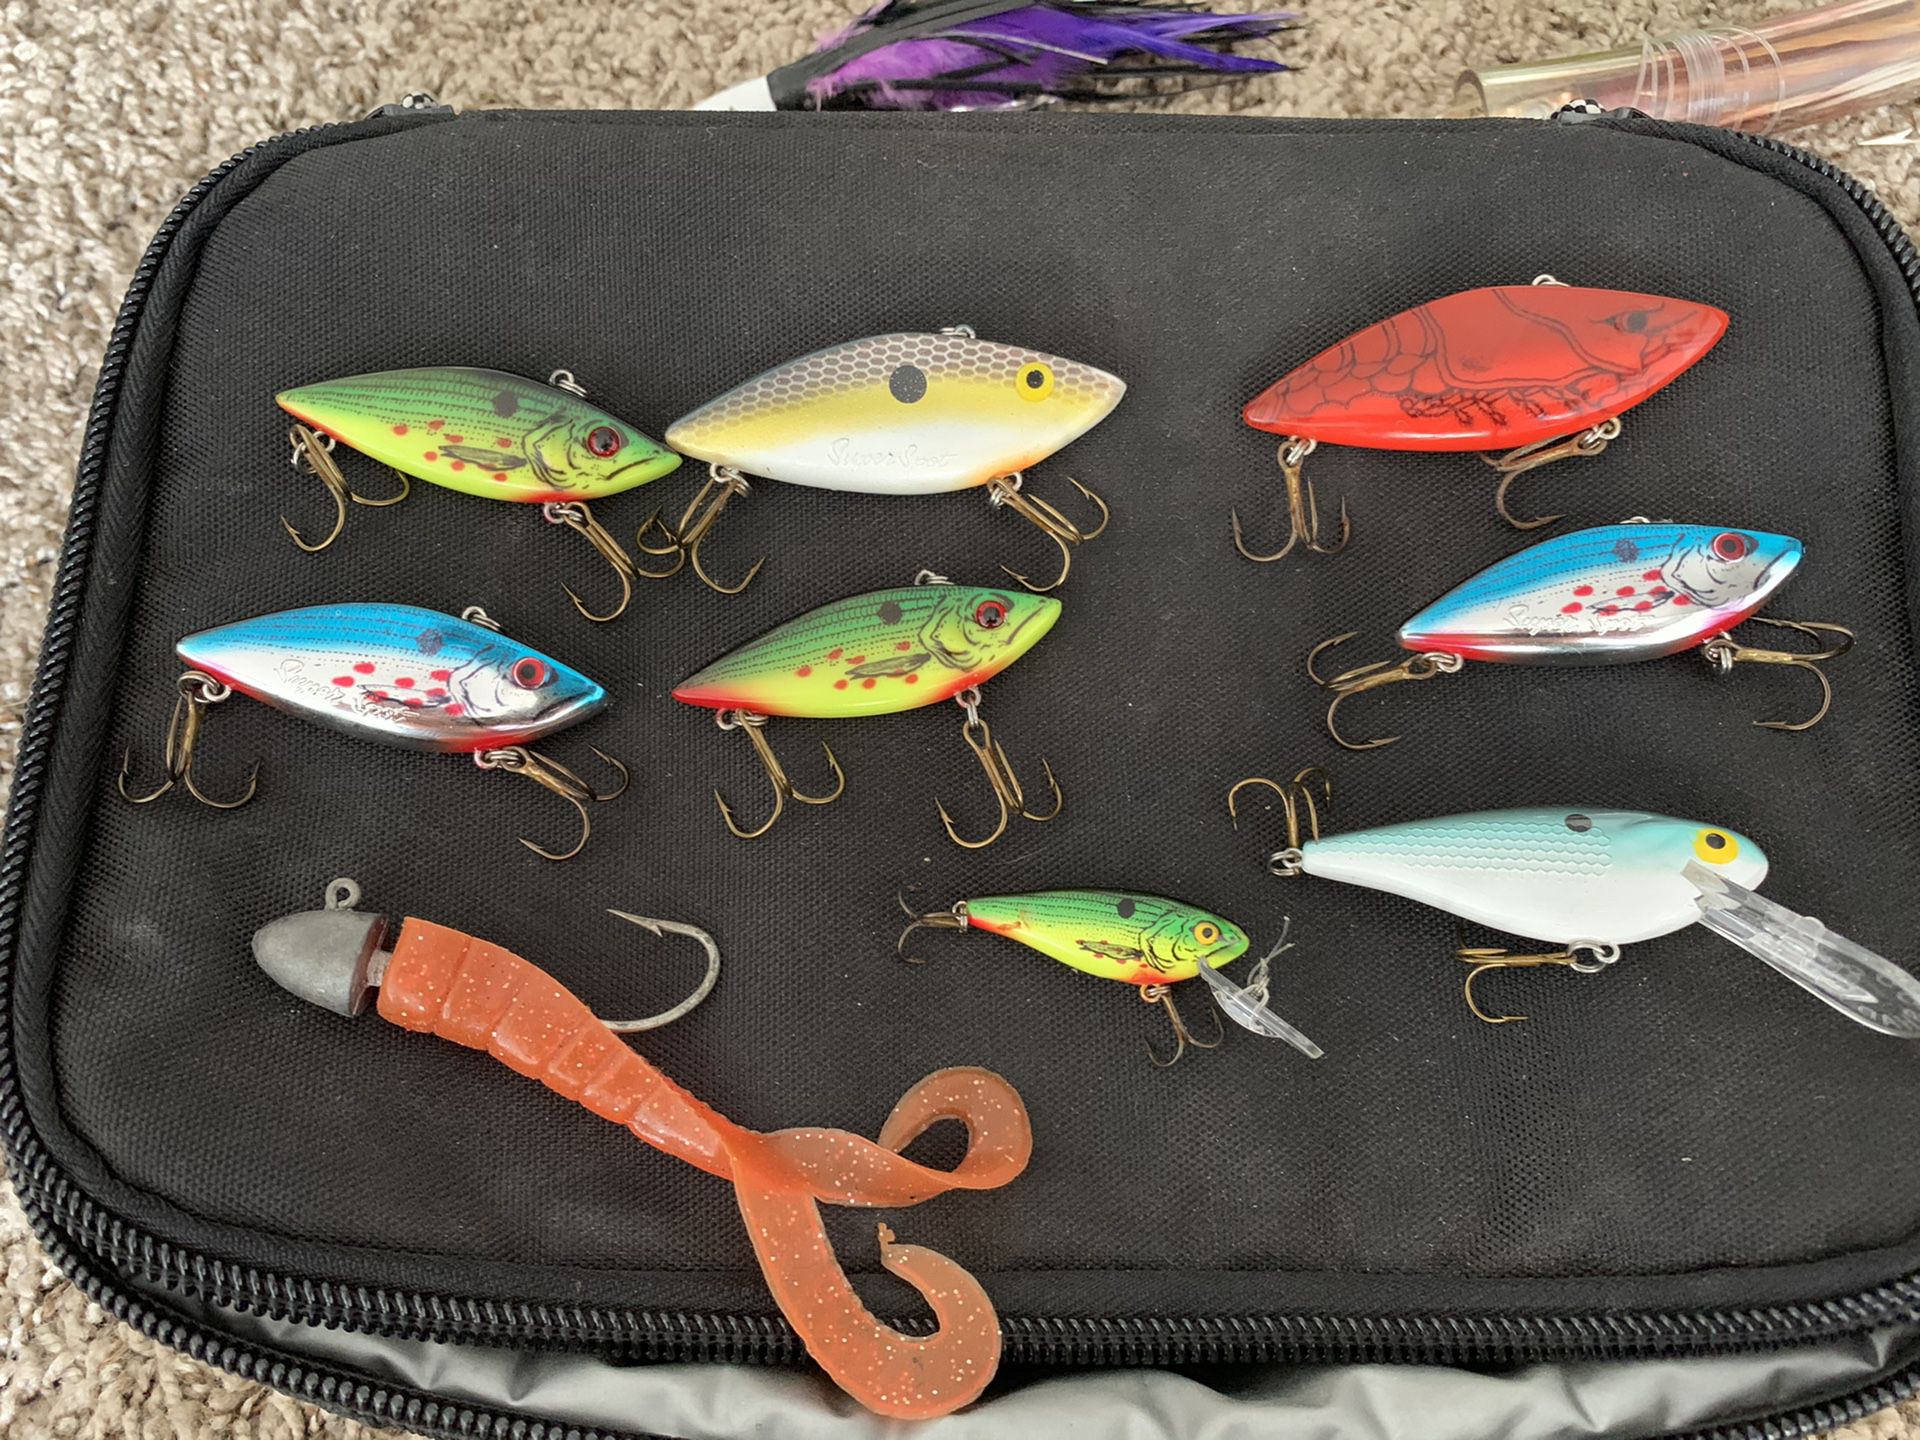 Ocean fishing lures and bag